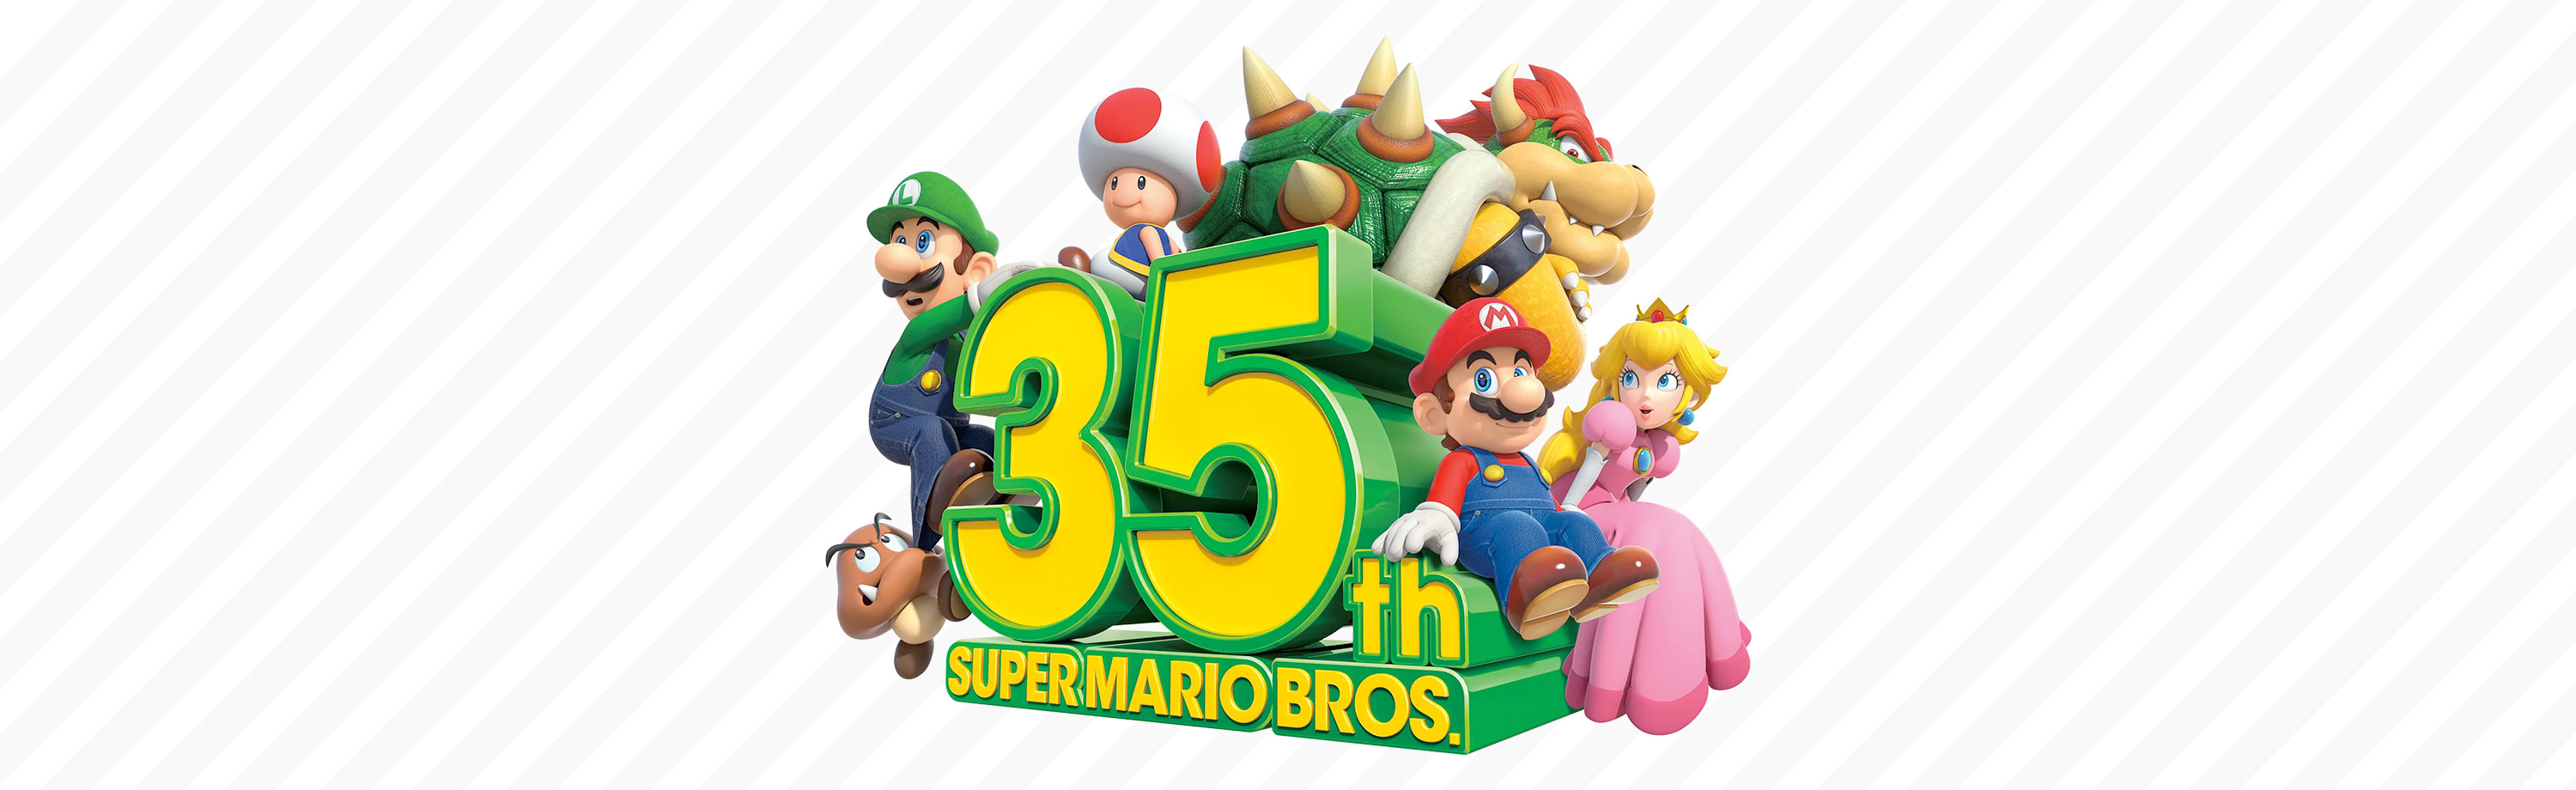 Super Mario Bros 35th Anniversary Direct Game Blog